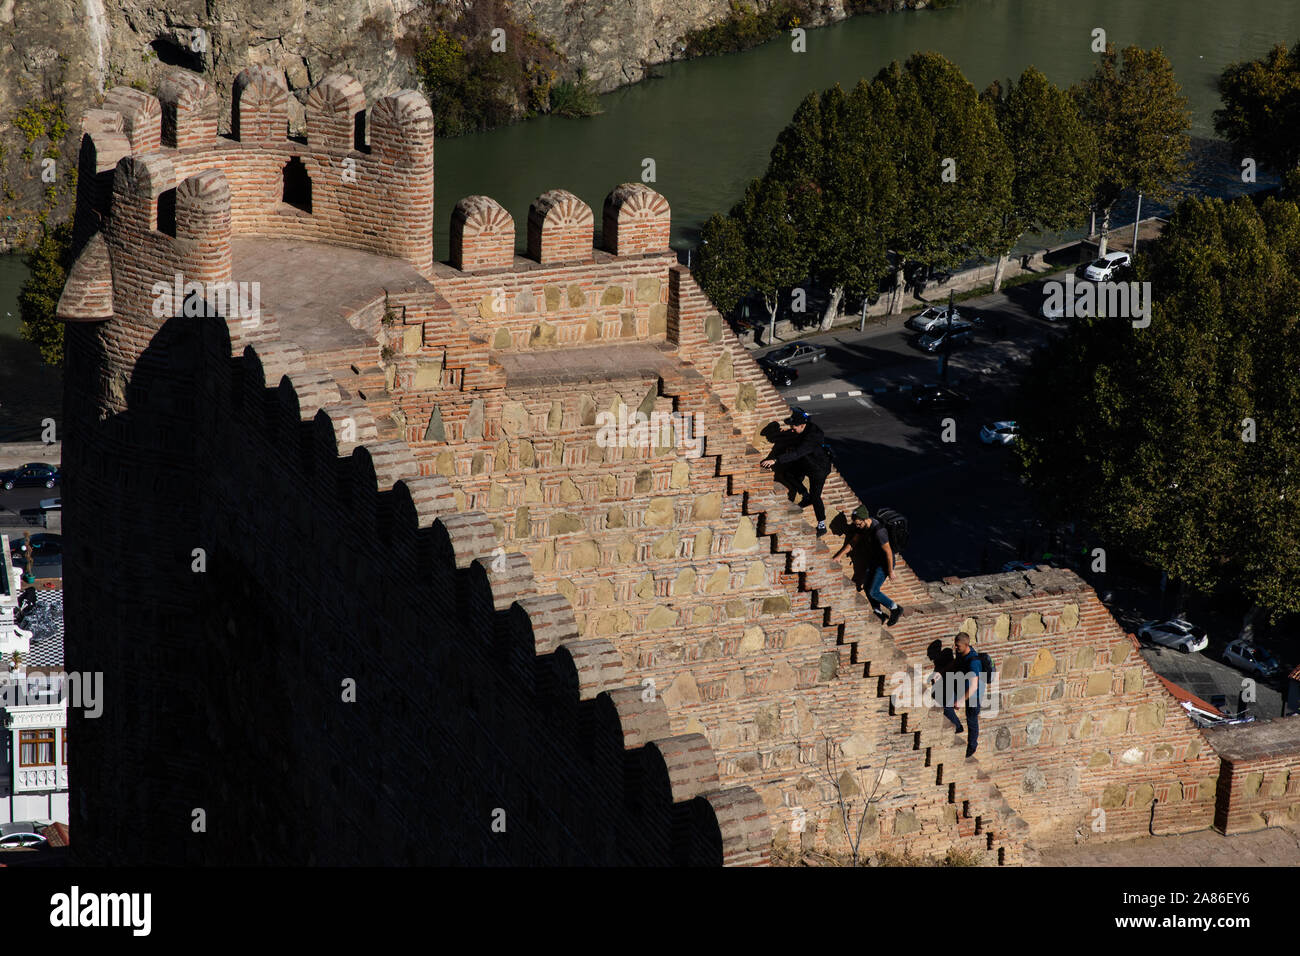 Tbilisi, Geogria. 6th Nov, 2019. Tourists visit the Narikala Fortress in Tbilisi, capital of Geogria, on Nov. 6, 2019. Credit: Bai Xueqi/Xinhua/Alamy Live News Stock Photo